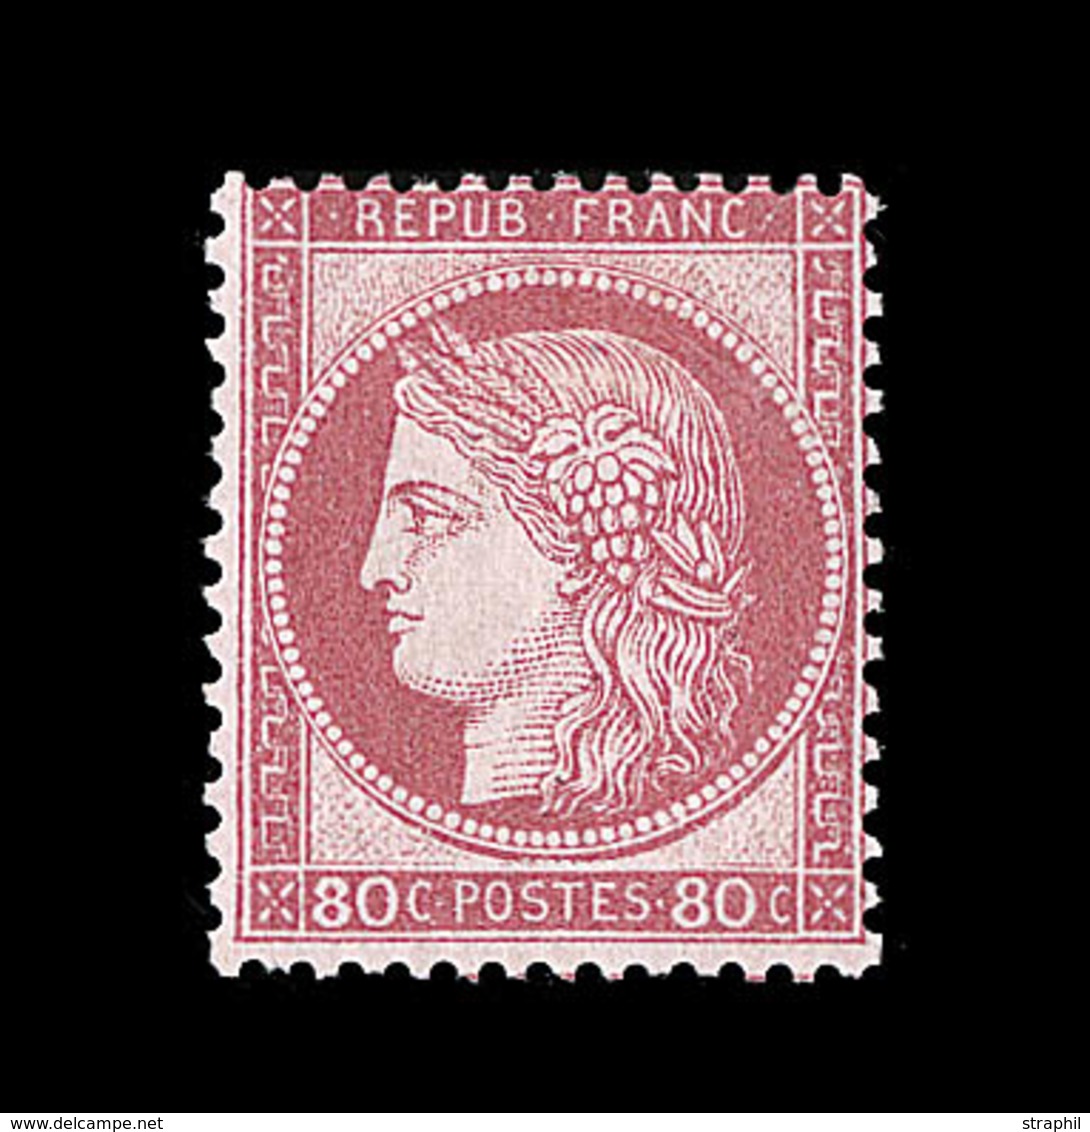 * CERES III ème REPUBLIQUE - * - N°57 - 80c Rose - Signé A. Brun - TB - 1871-1875 Ceres